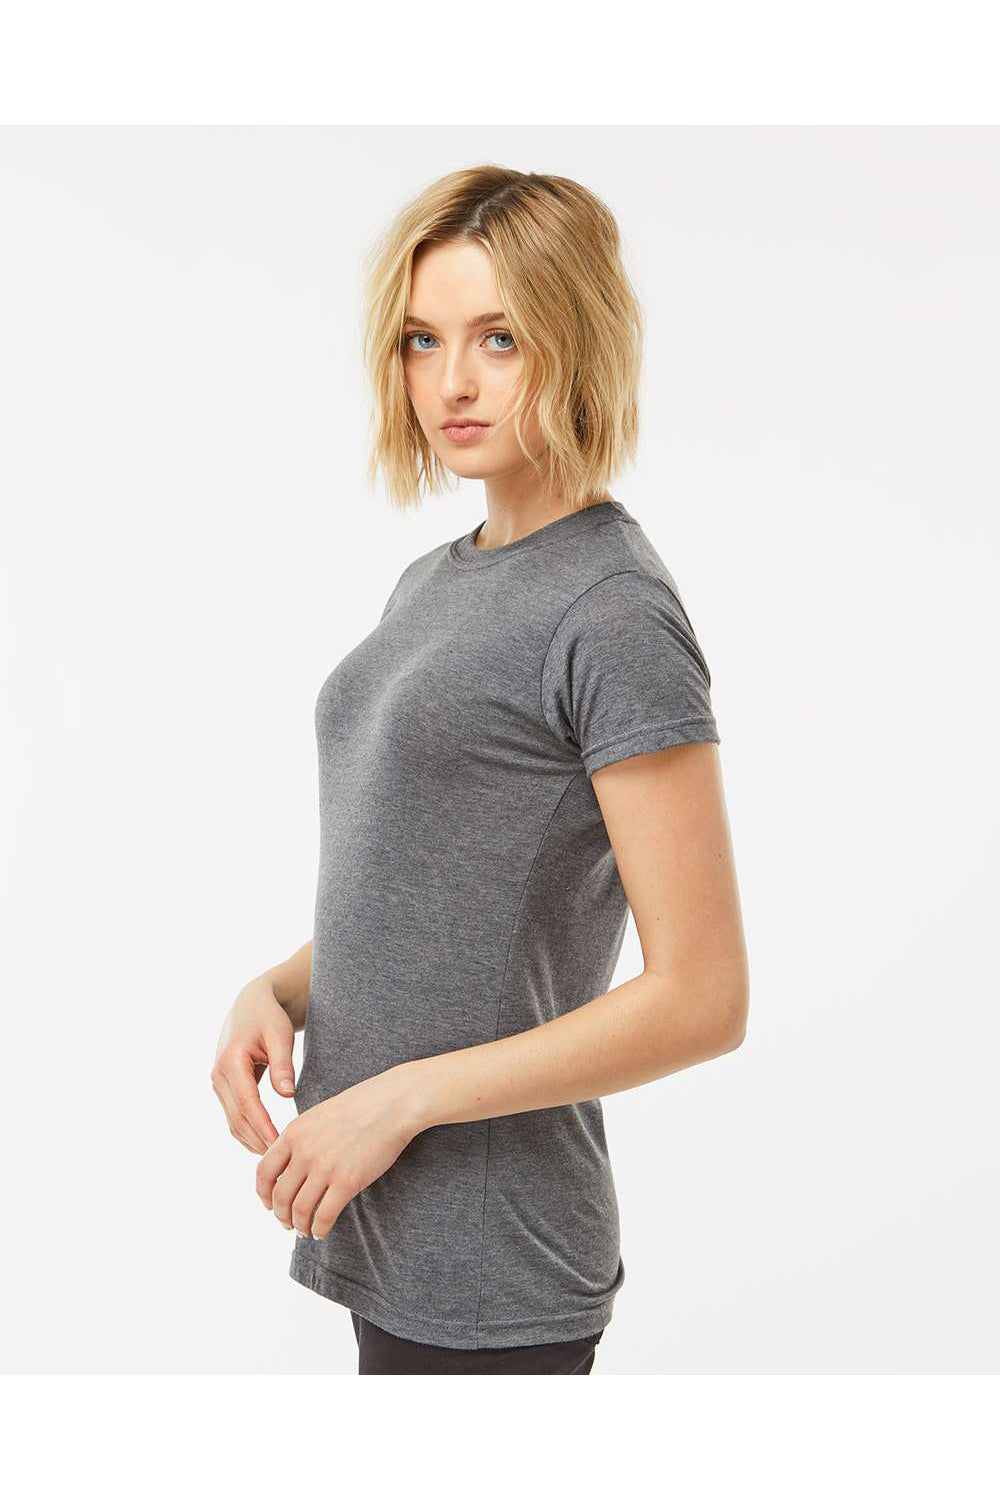 Tultex 240 Womens Poly-Rich Short Sleeve Crewneck T-Shirt Heather Charcoal Grey Model Side